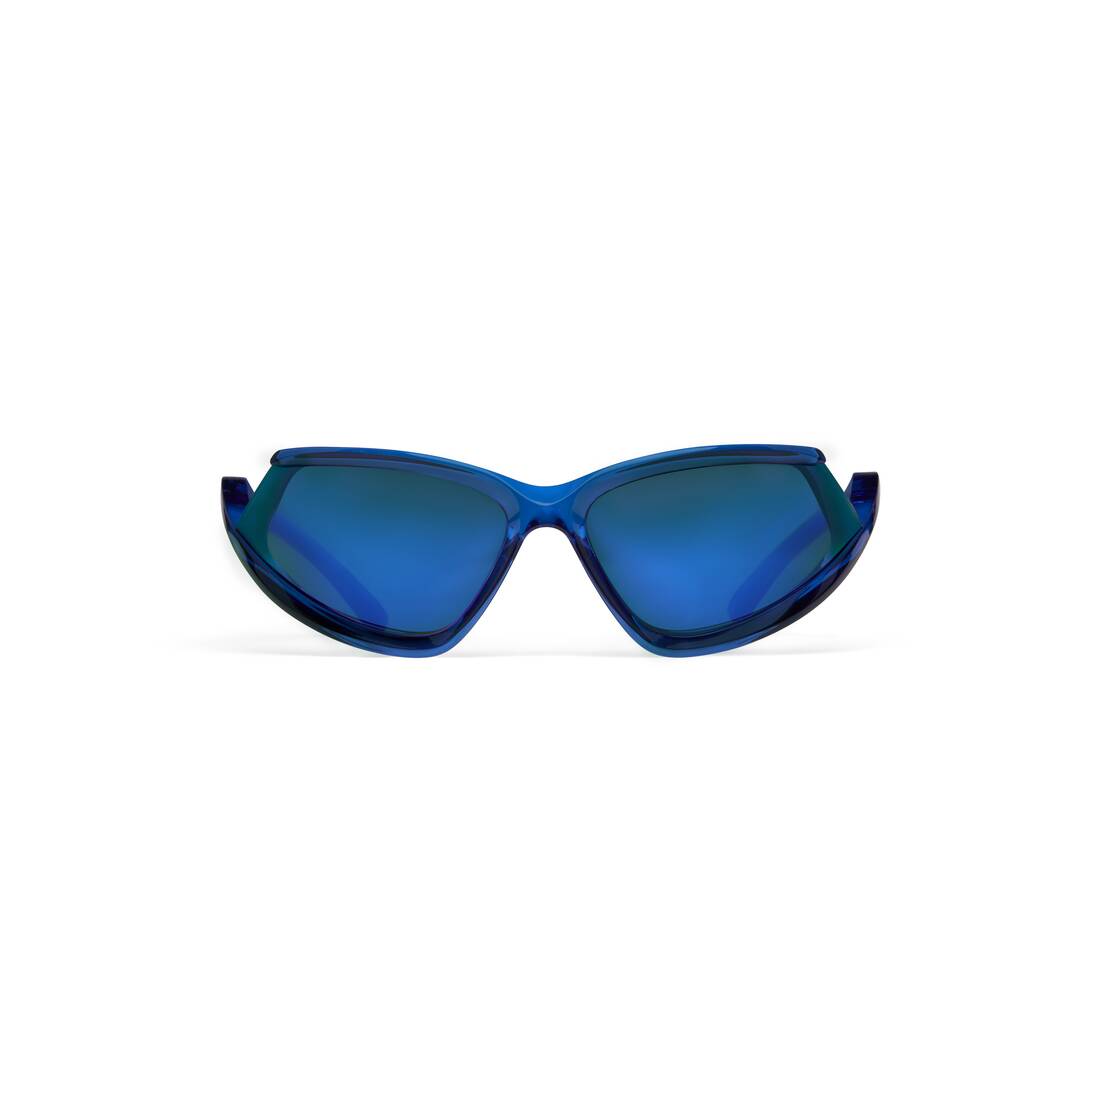 Buy Sunglasses Online|Cat 4 UV protection Black Blue|Quechua